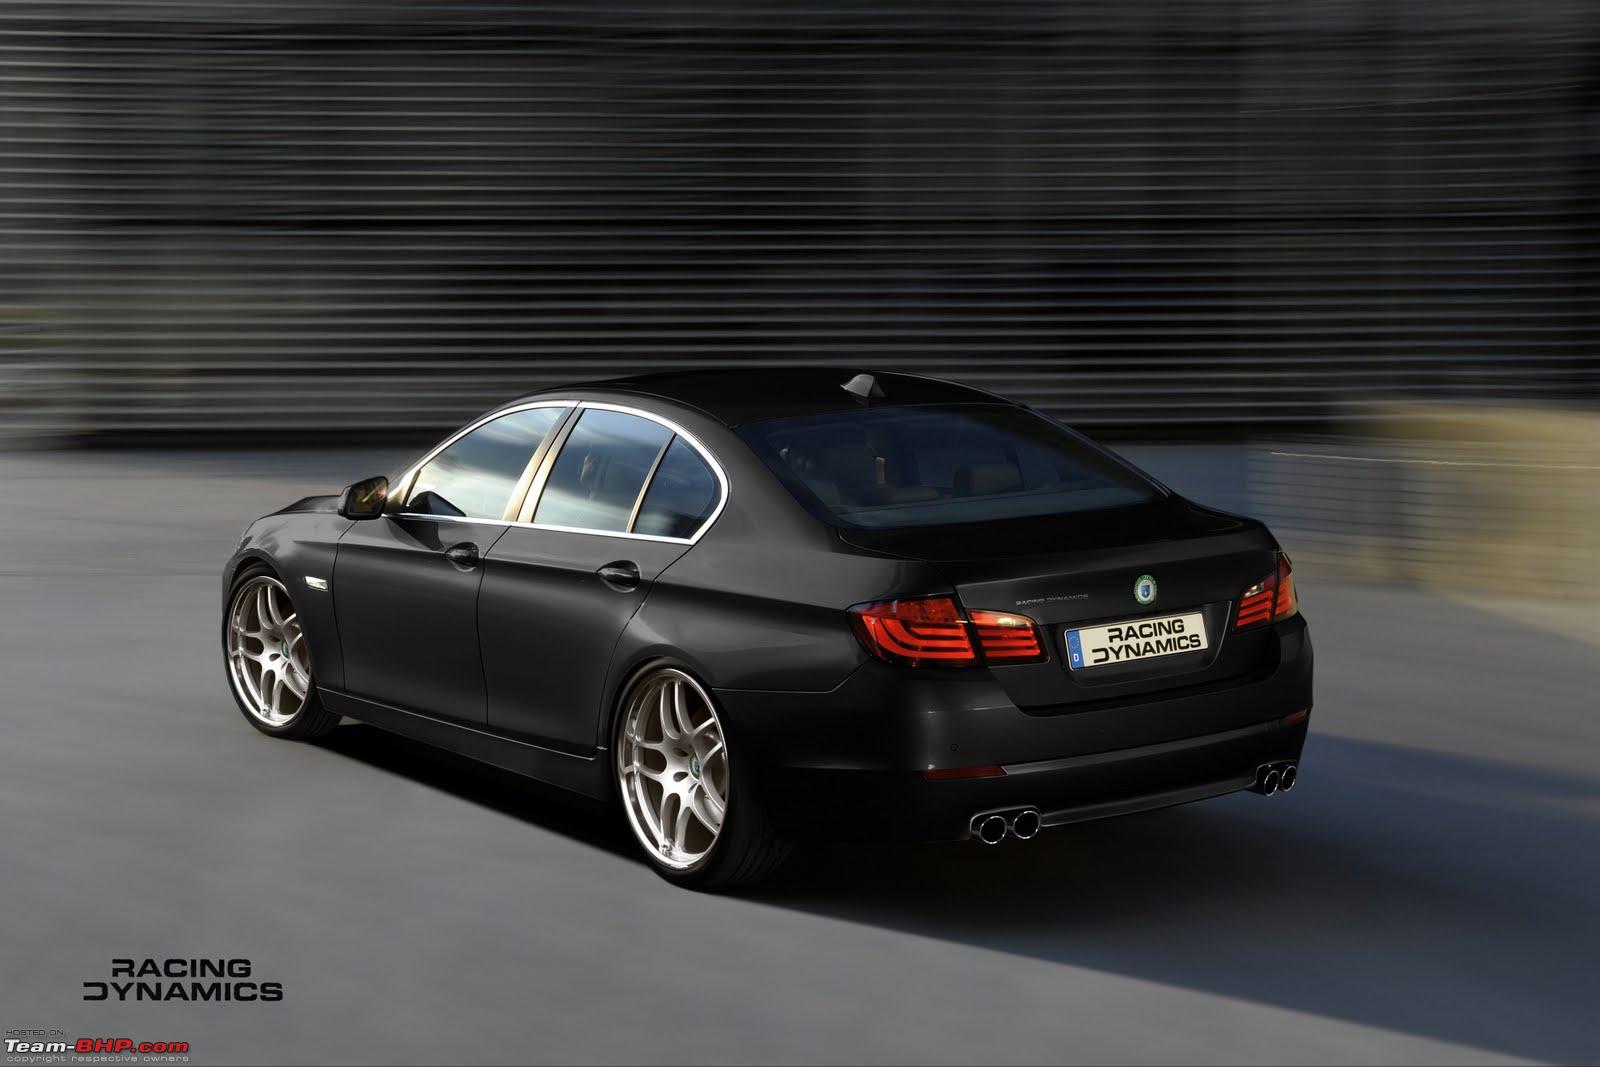 Racing Dynamics Preparing 2011 BMW 5-Series (F10) Tuning Program